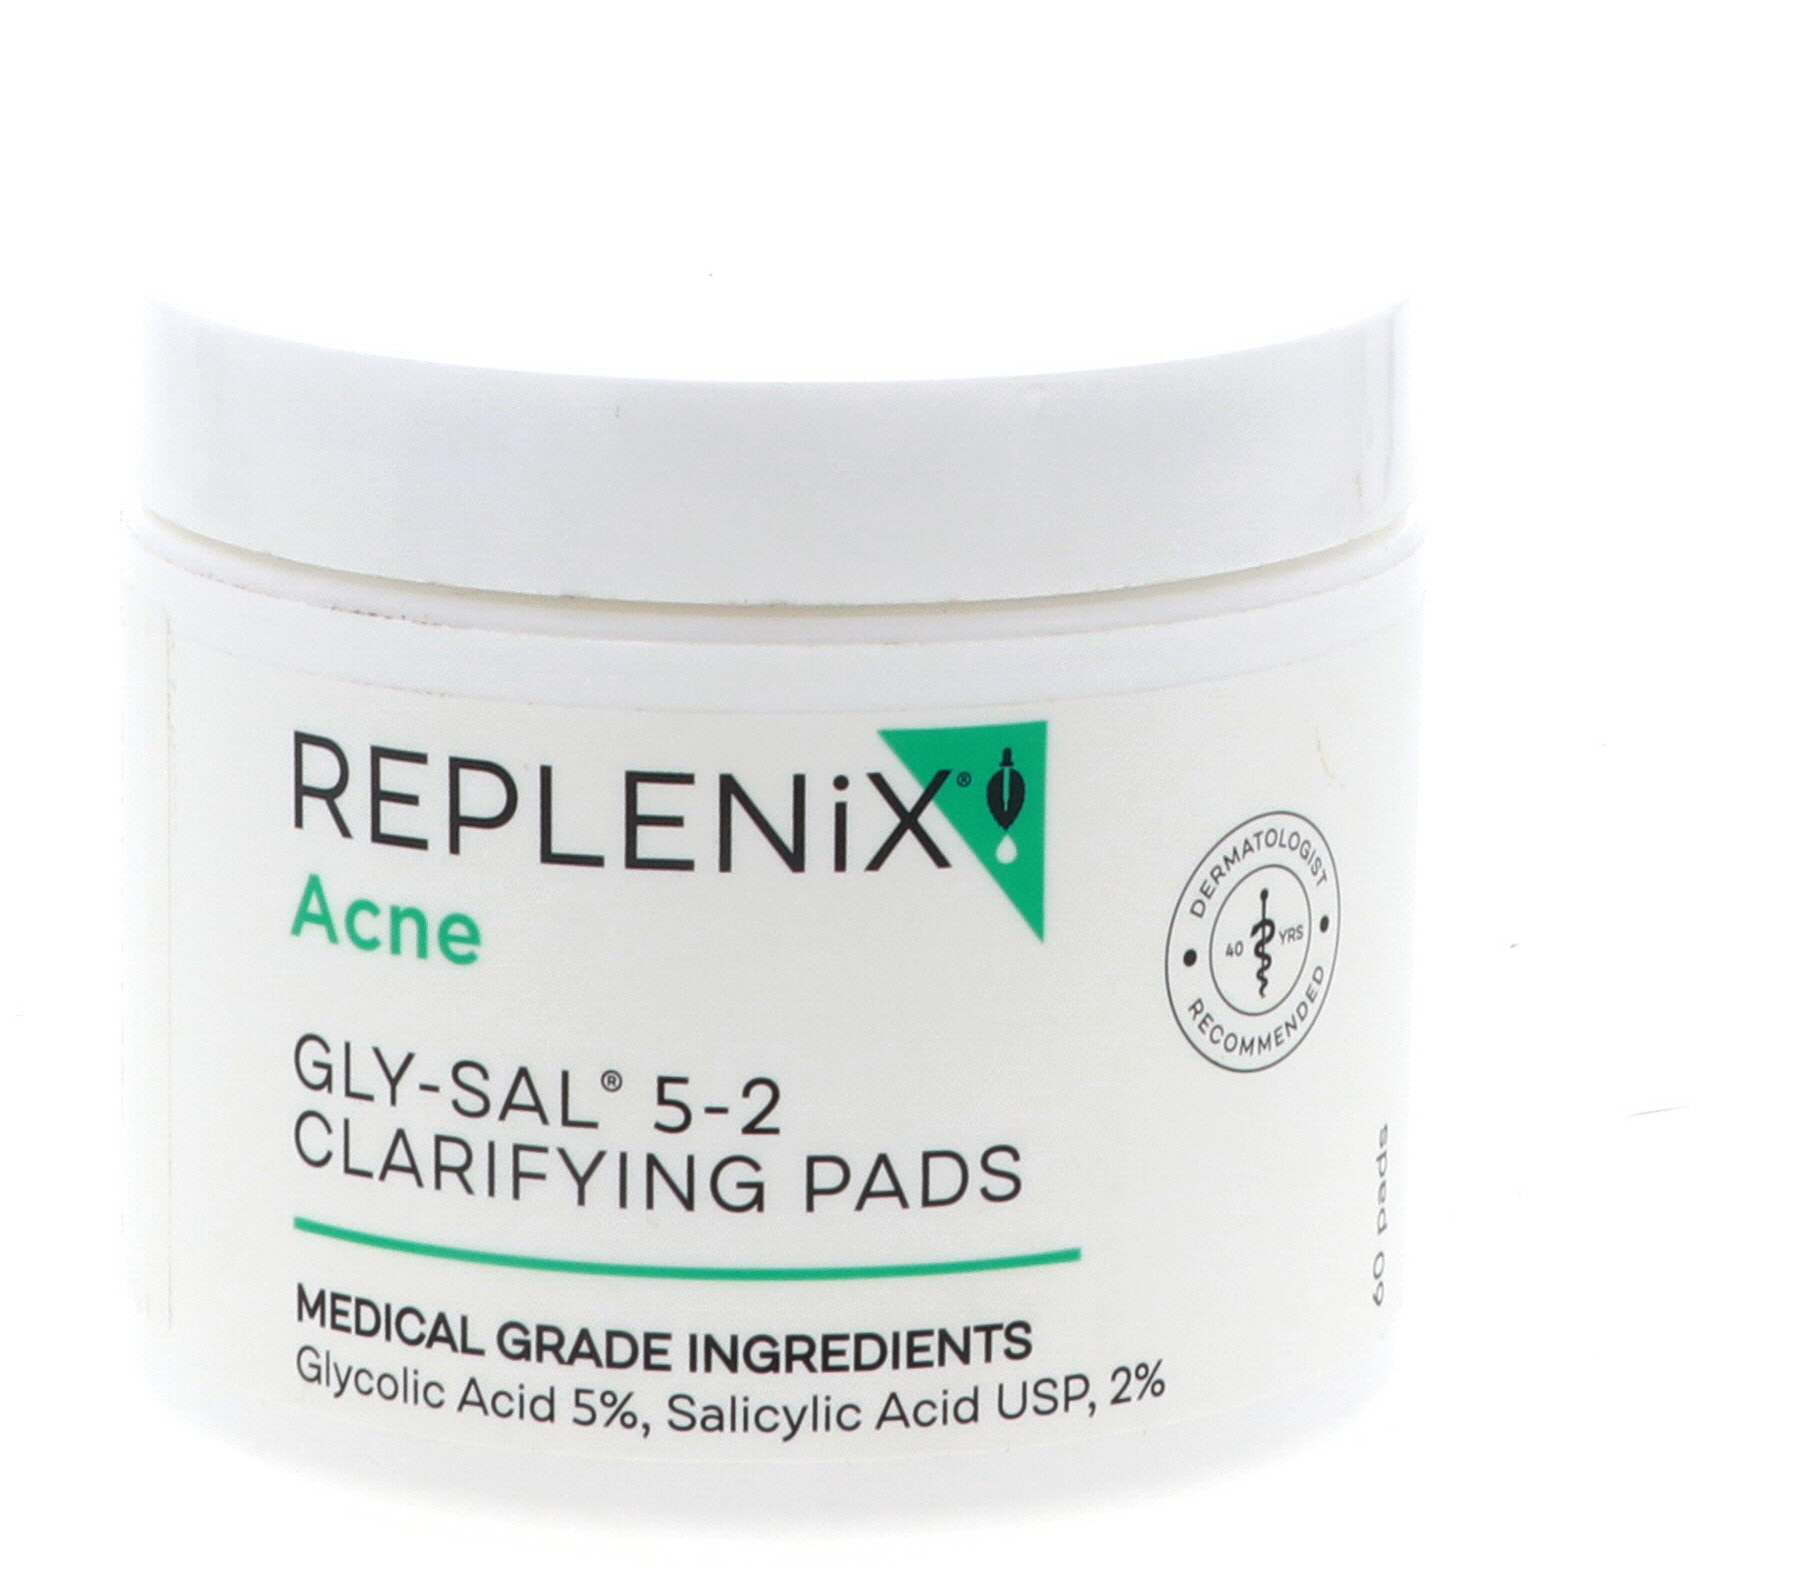 Replenix Gly-Sal 5-2 Clarifying Pads, 60 pads - image 4 of 4